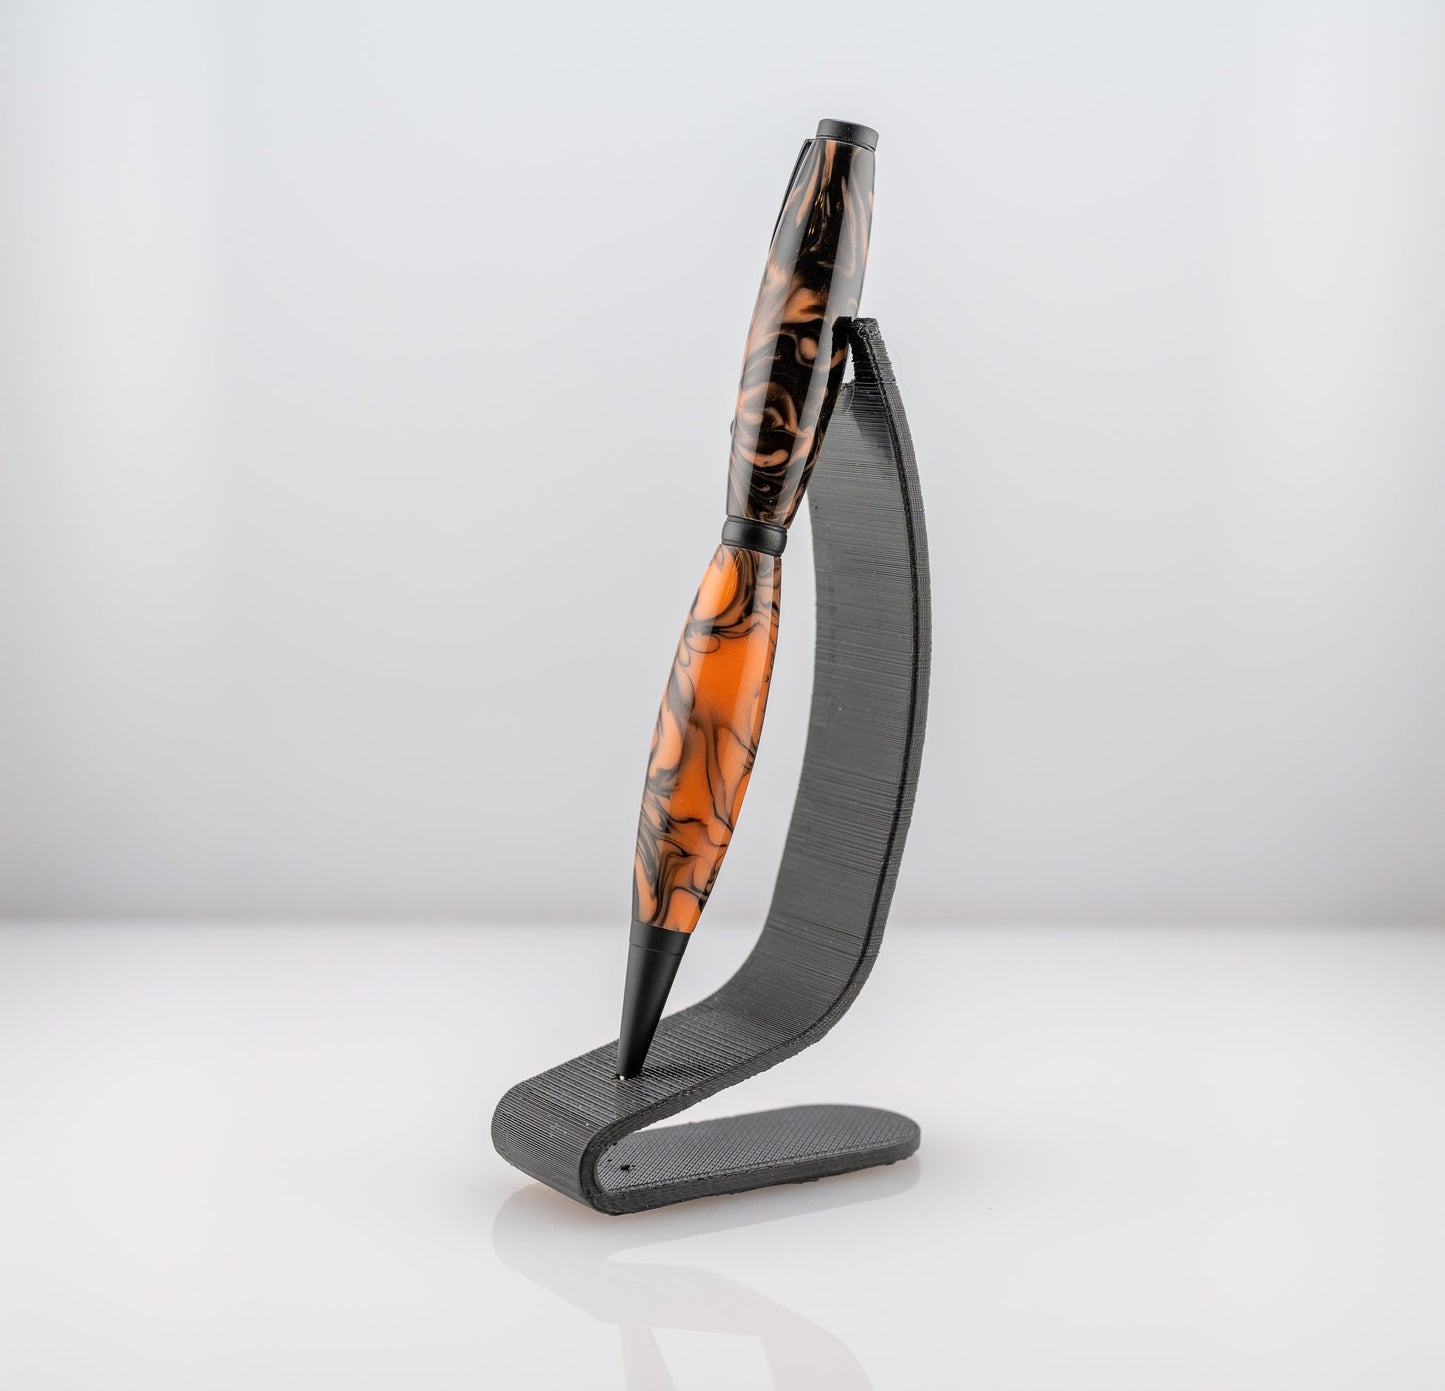 Handmade orange and black resin twist ballpoint pen on a black stand